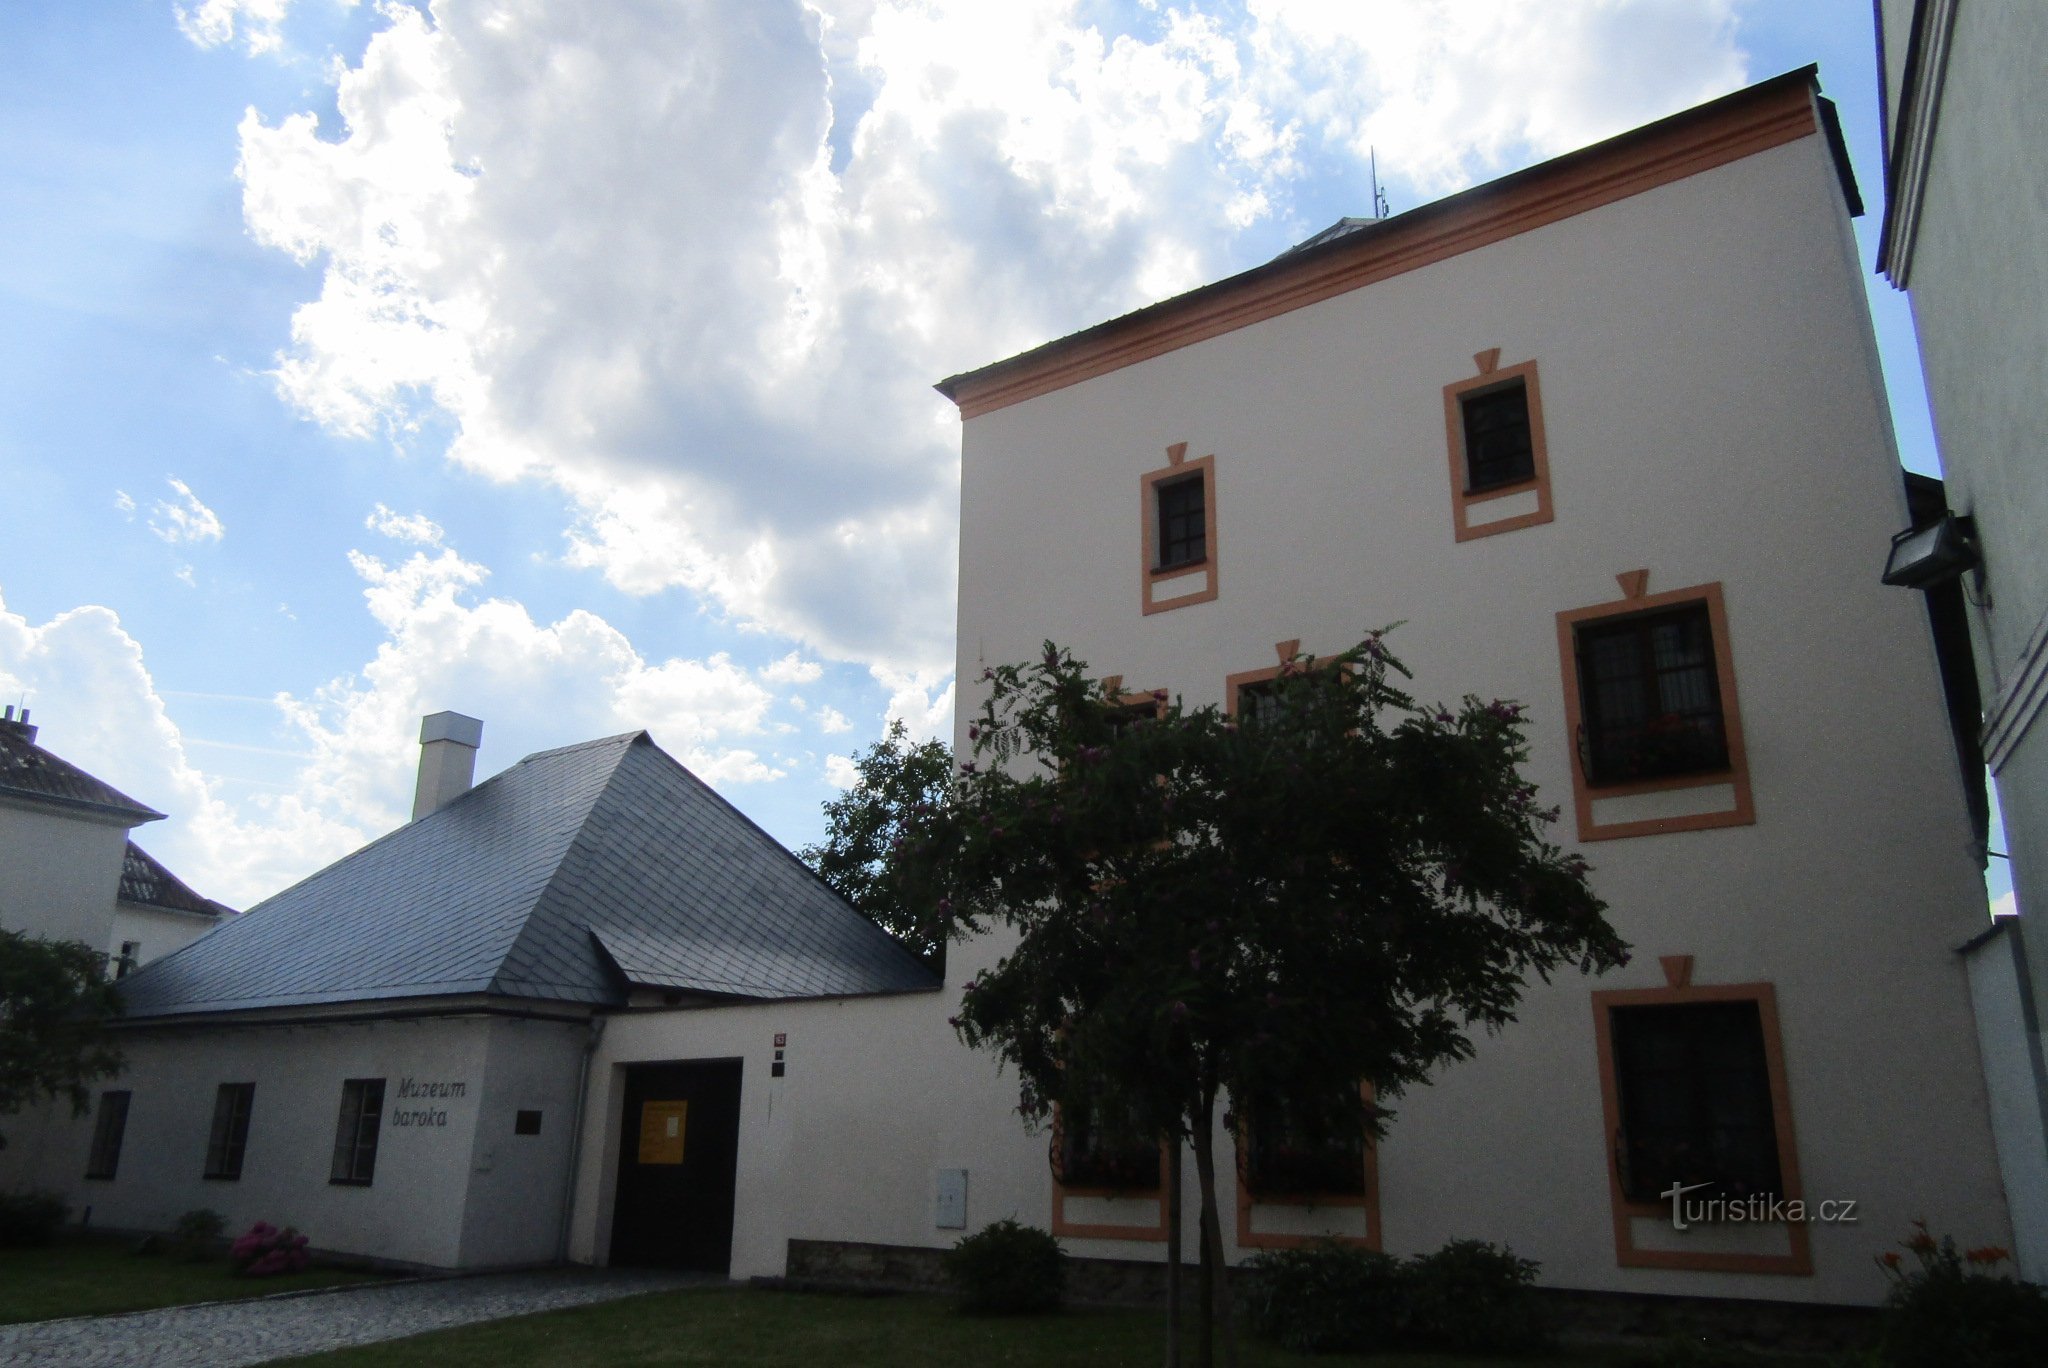 Uničovin museoon